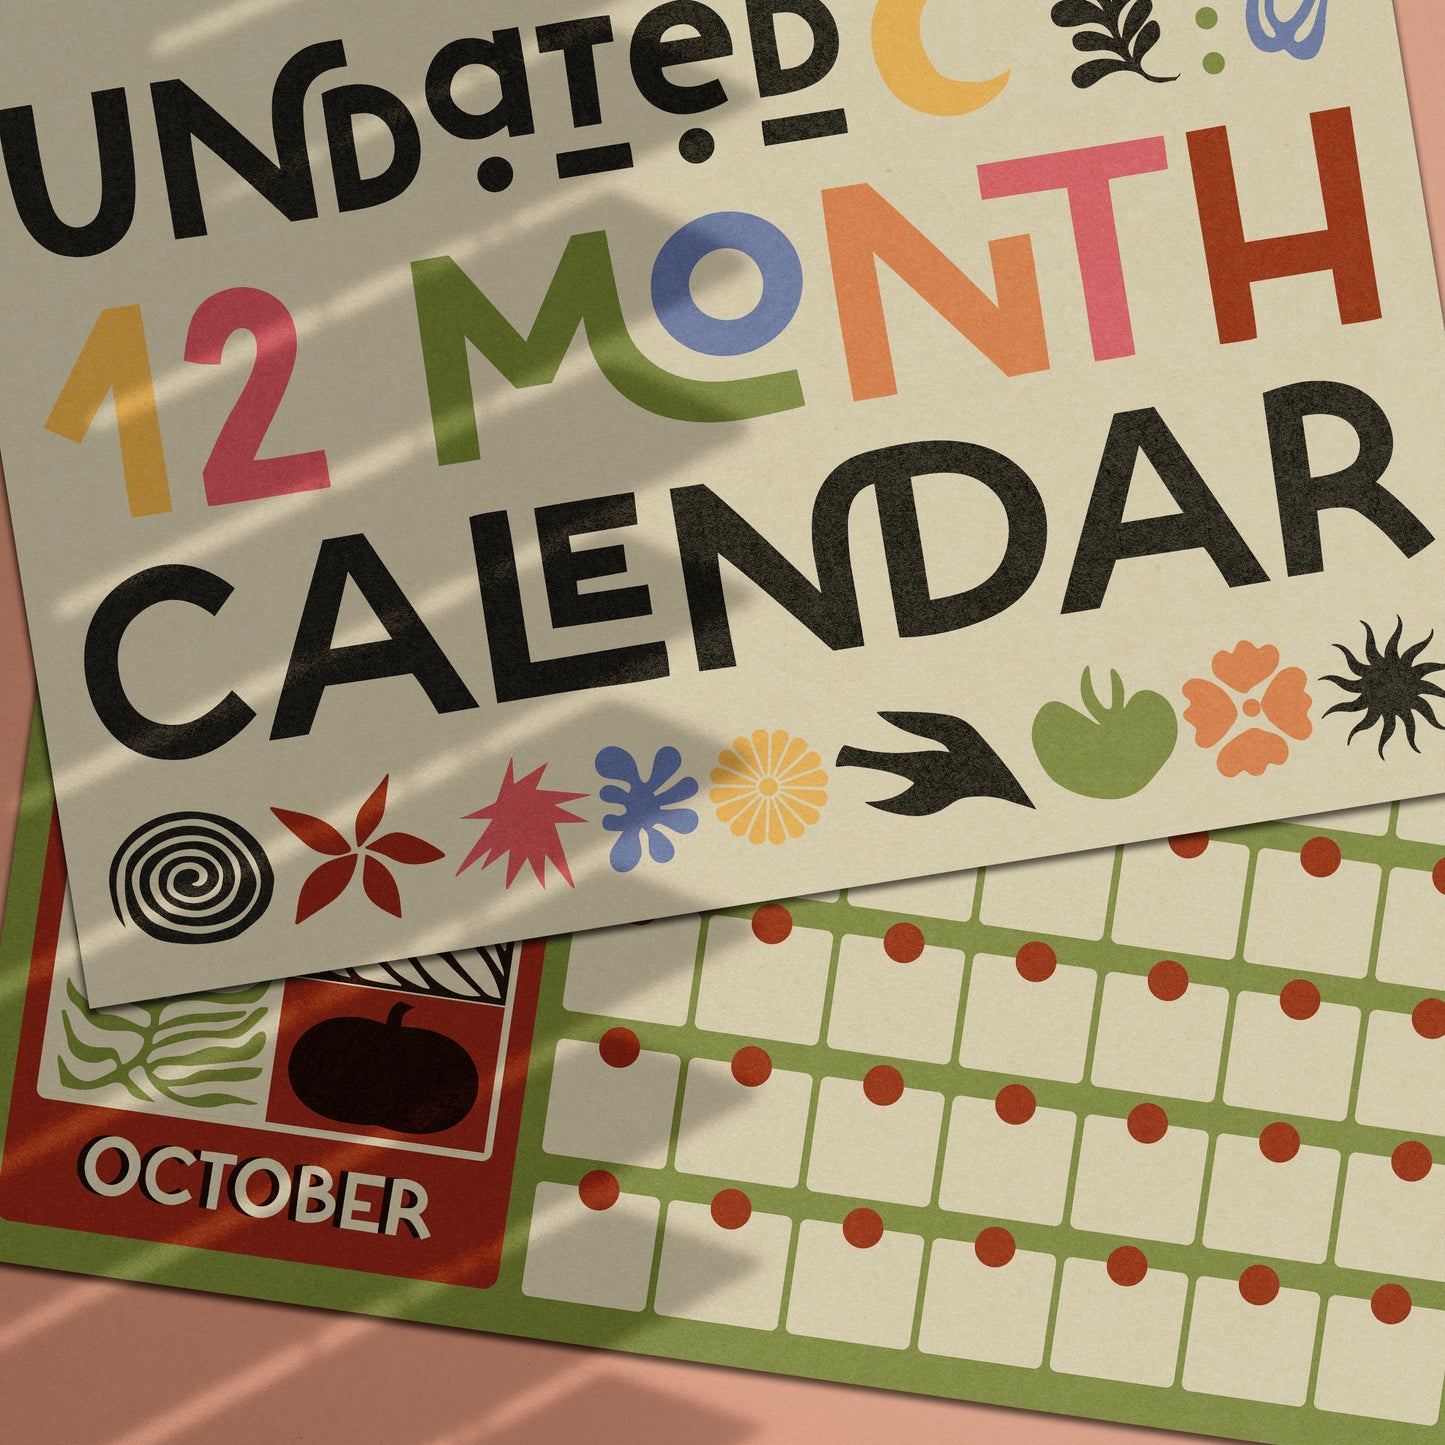 Undated Monthly Calendar | Wall Planner | Matisse Inspired | A4 Landscape | 12 month wirebound hanging calendar-7